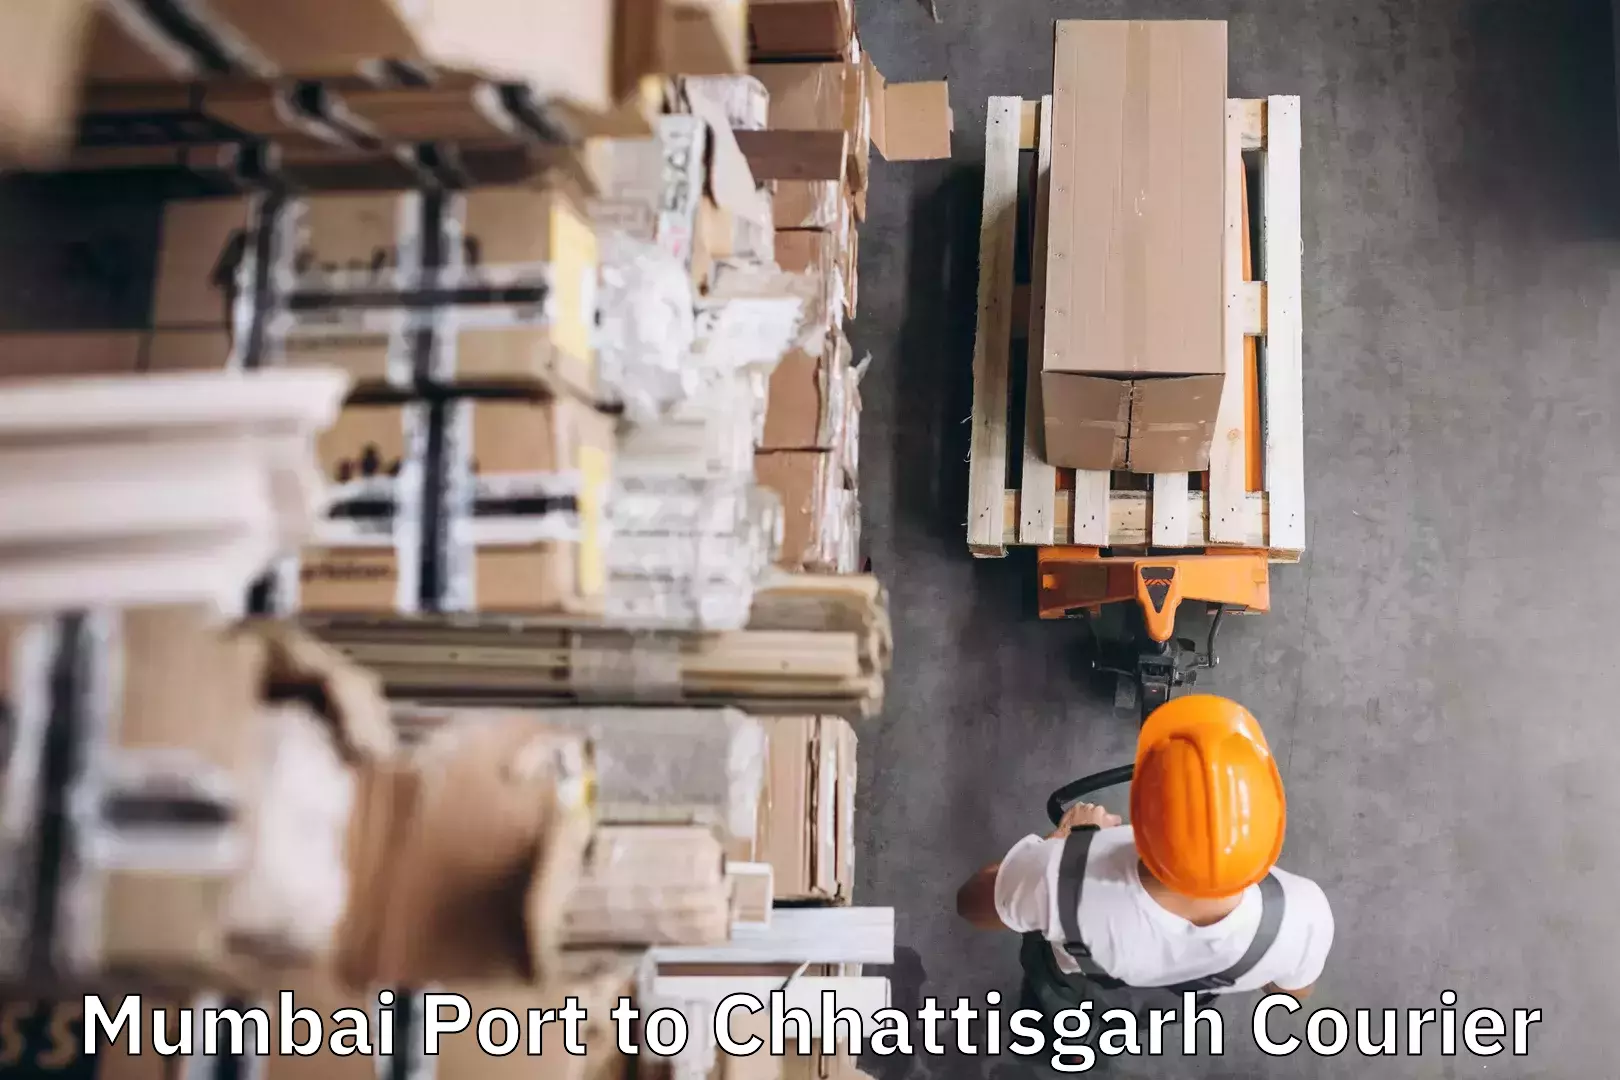 Luggage shipment tracking in Mumbai Port to Kharsia